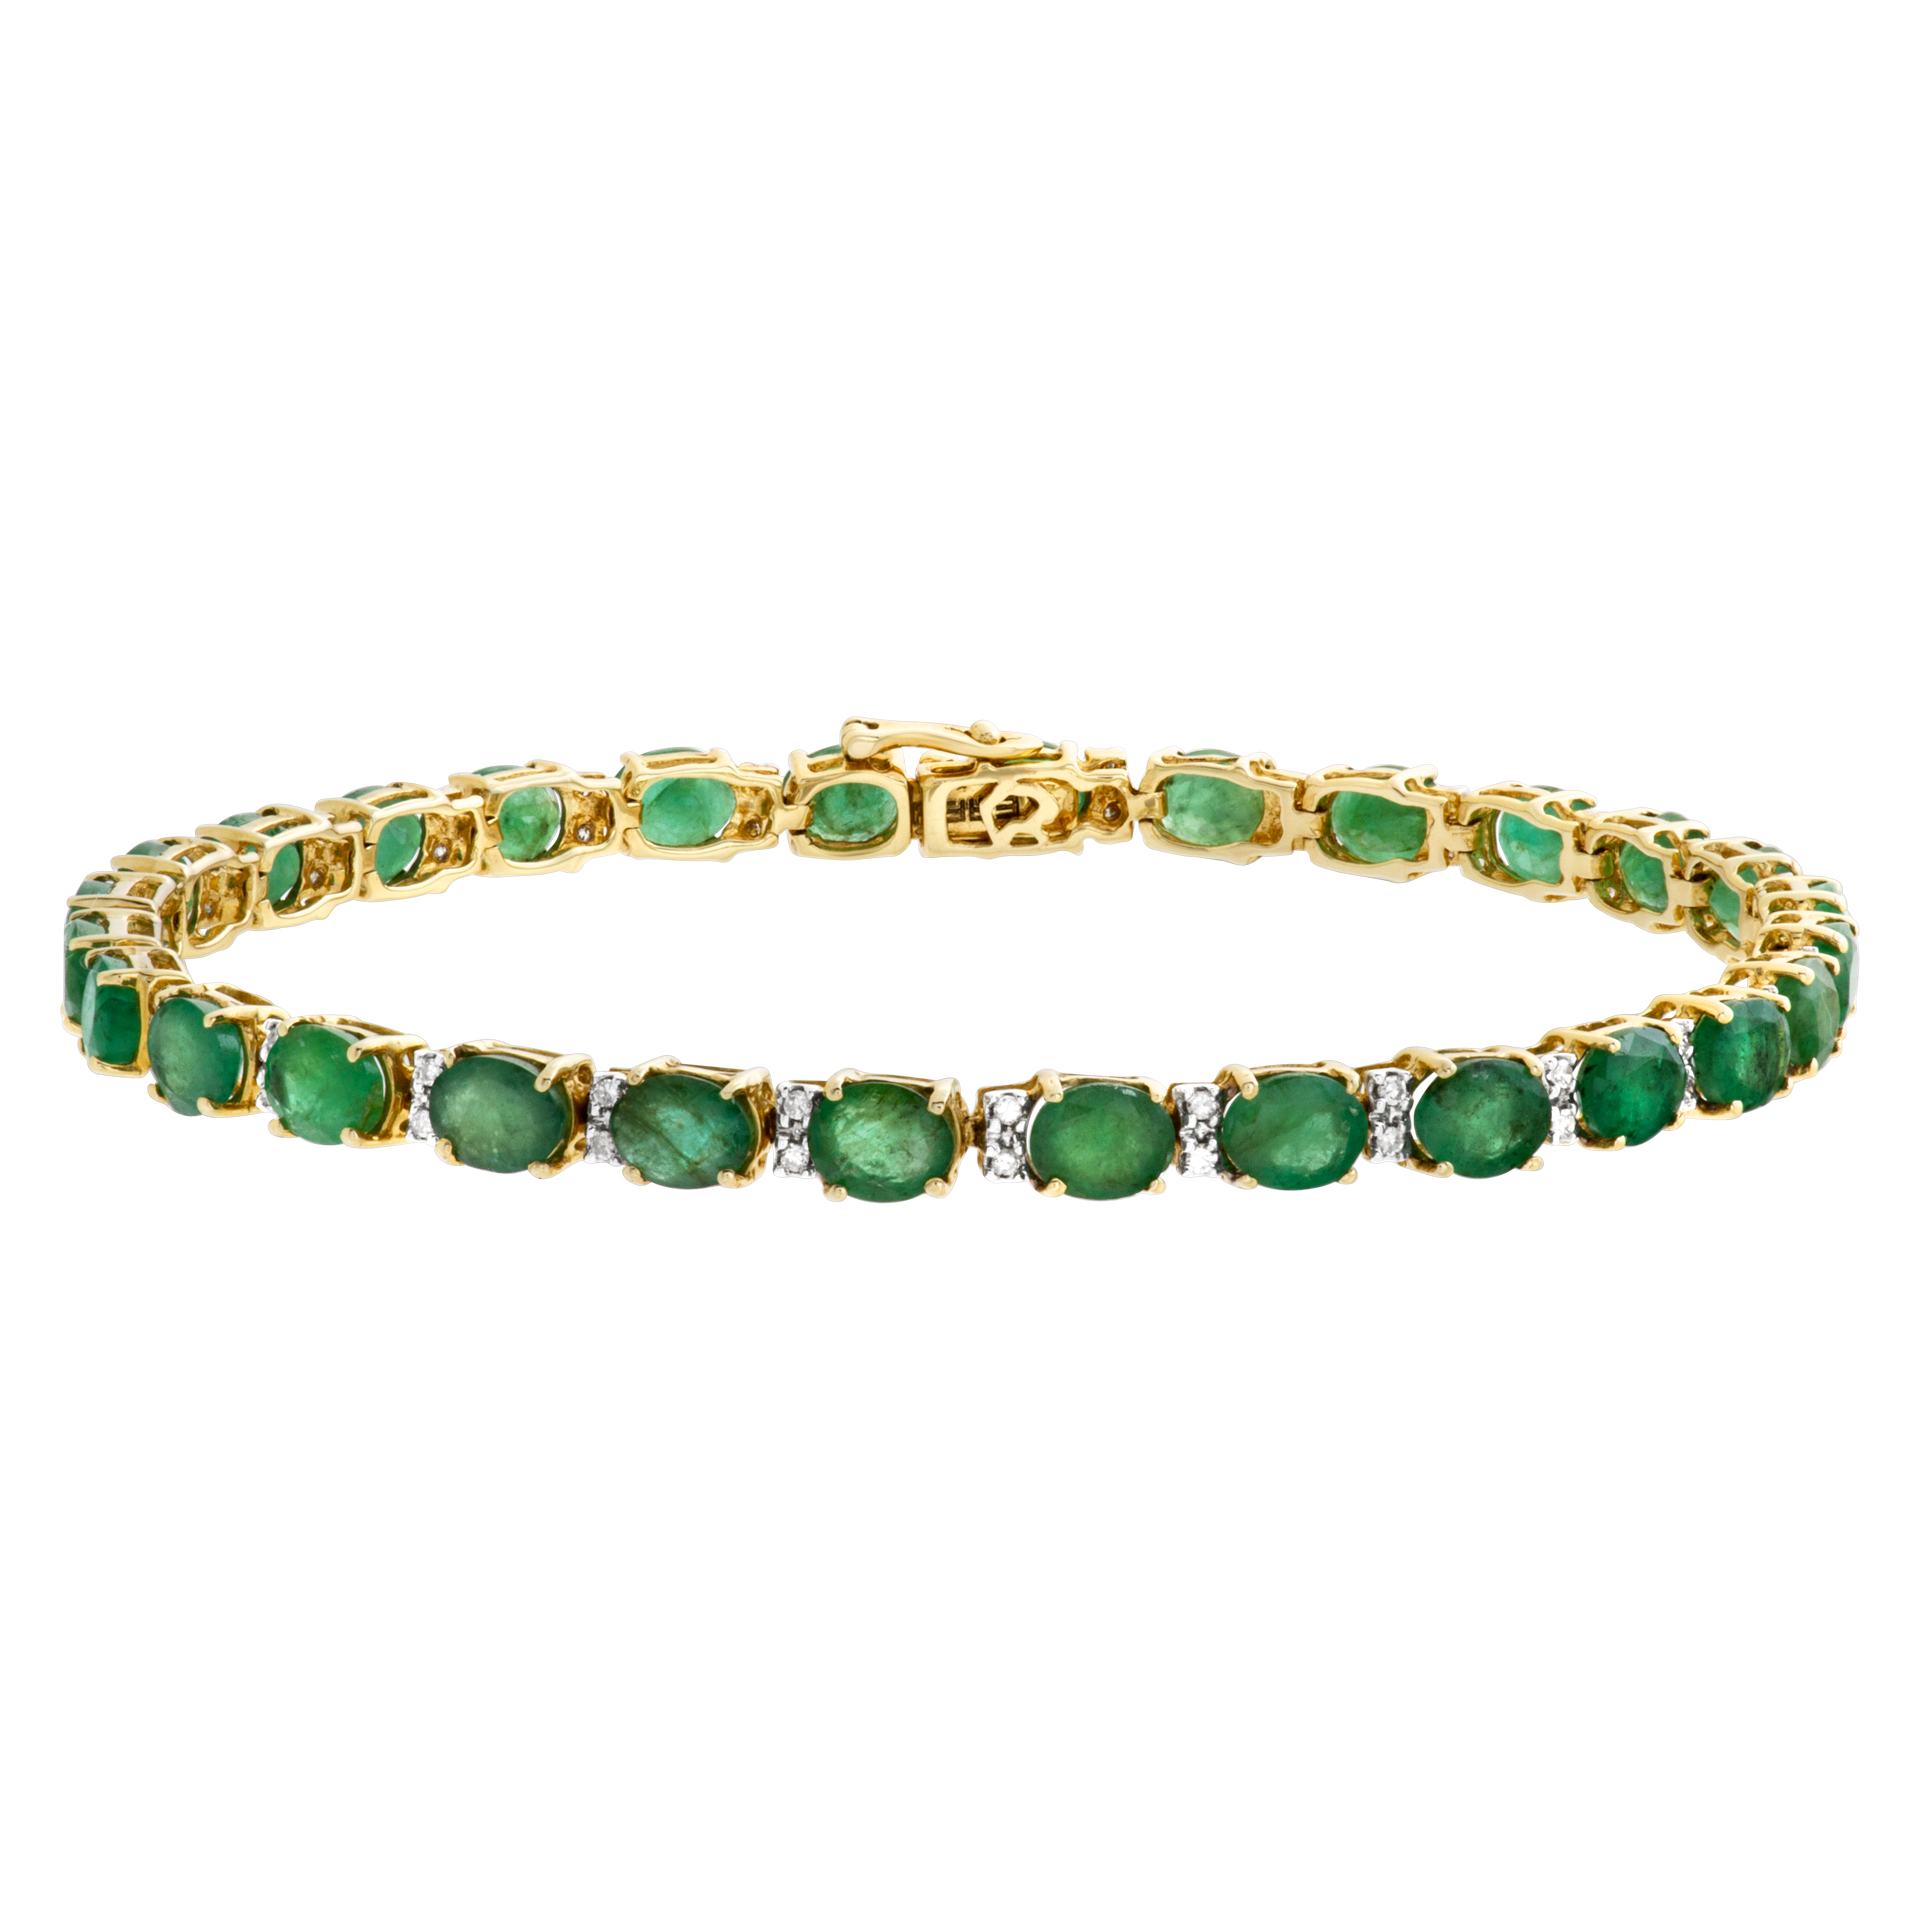 Emerald and diamond line bracelet in 14k image 1